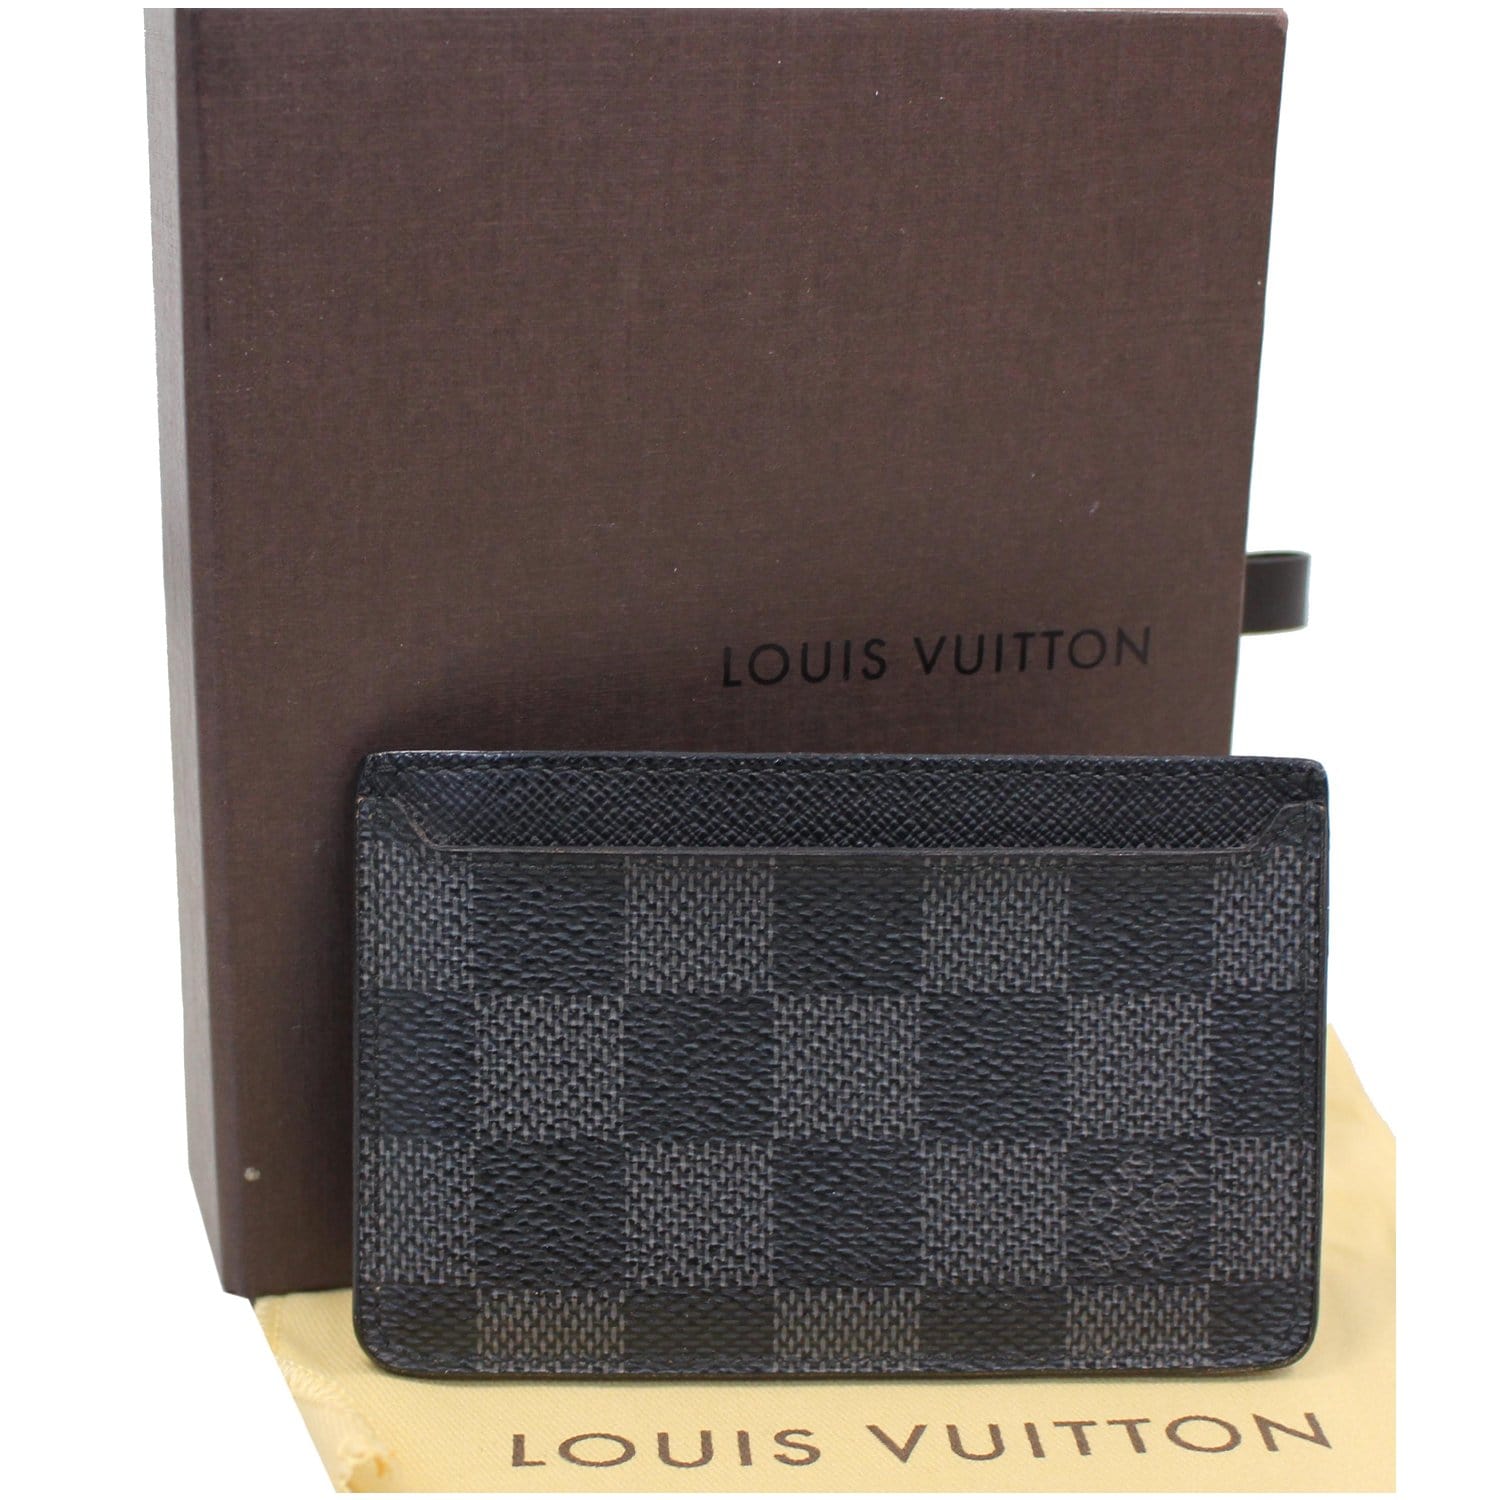 Louis Vuitton Damier Graphite Canvas Document Holder